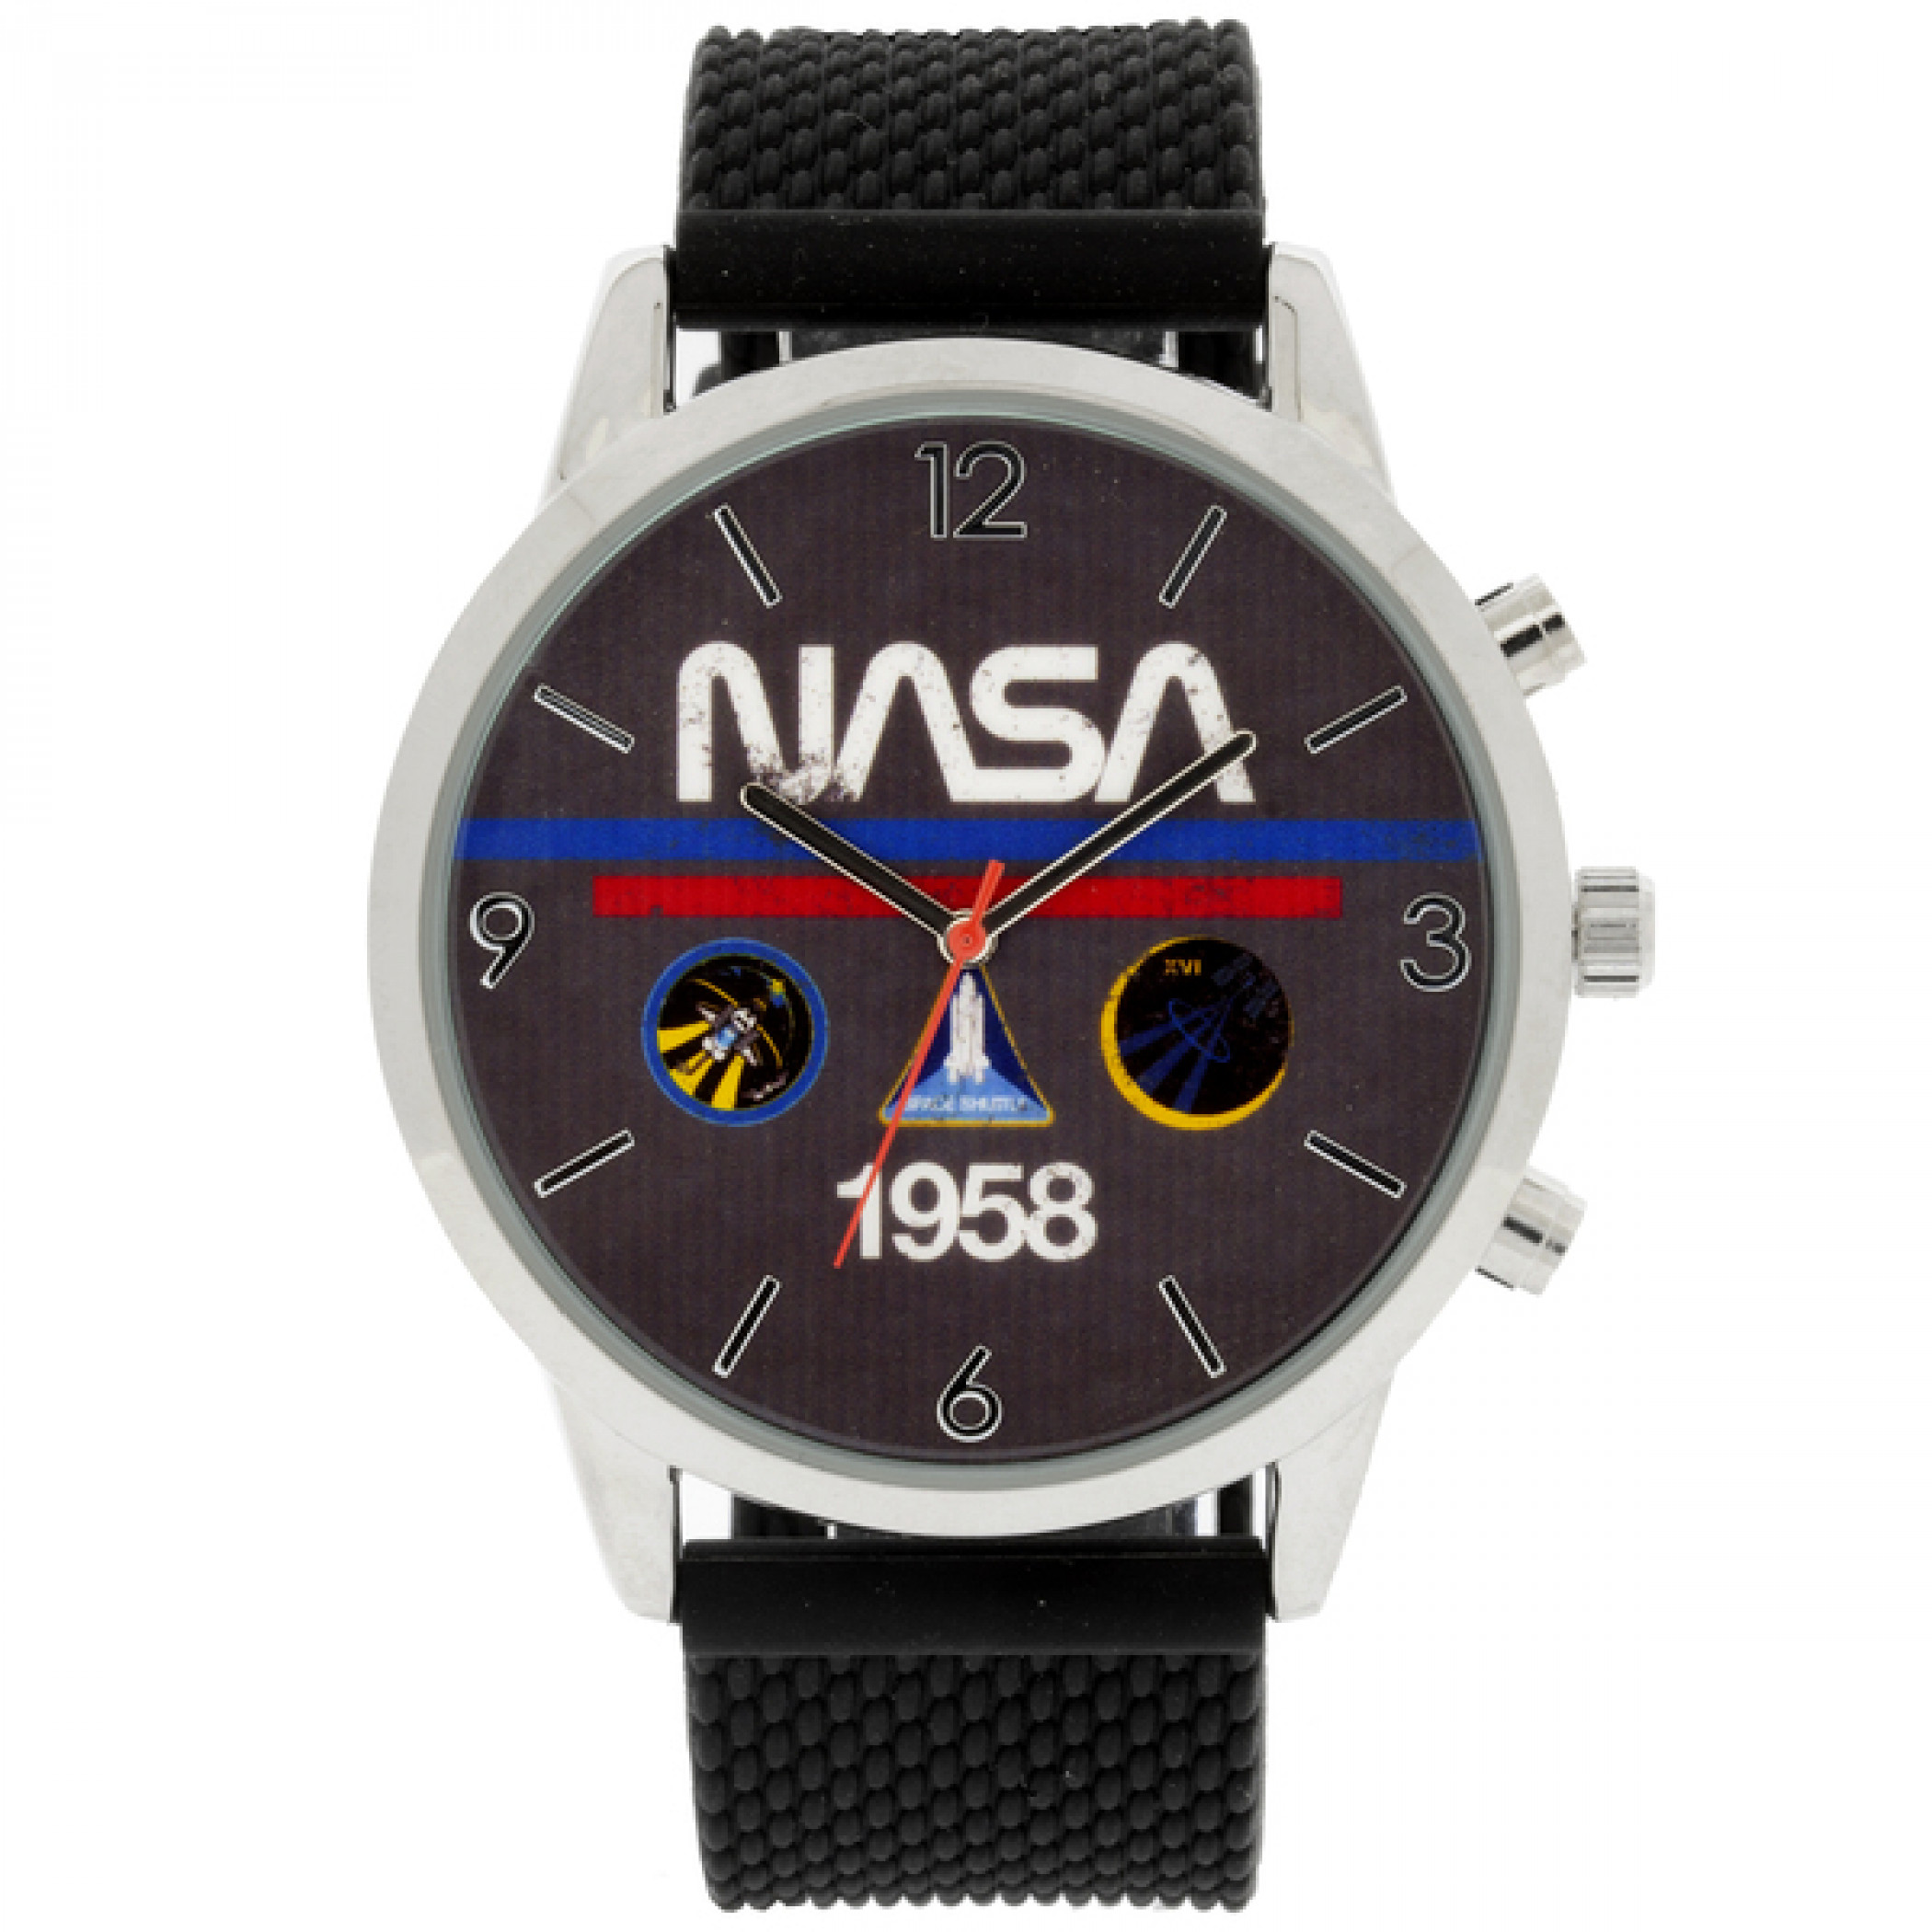 NASA 1958 Analog Watch with Silicone Band